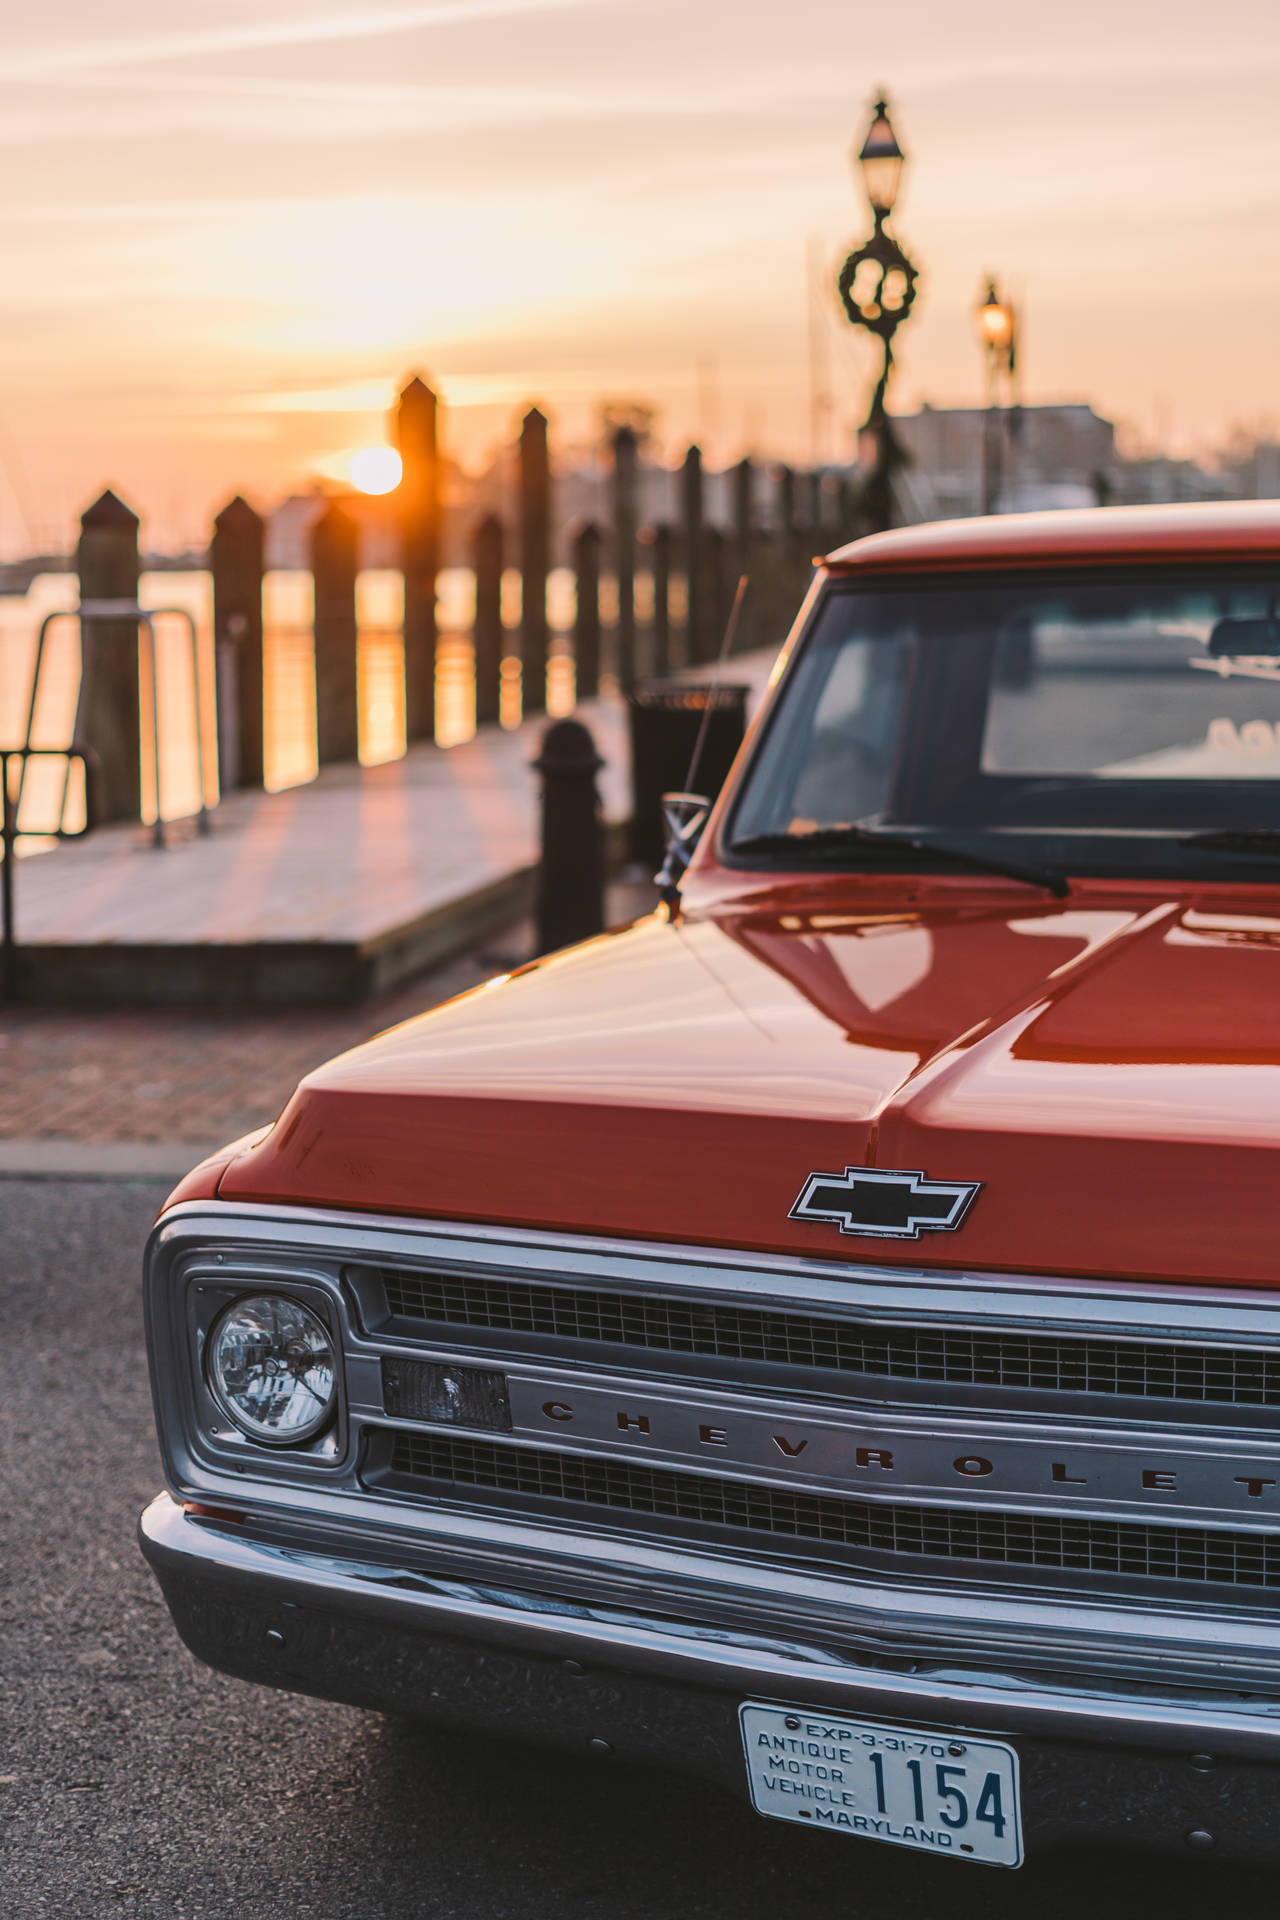 Red Chevrolet Vintage Truck Background